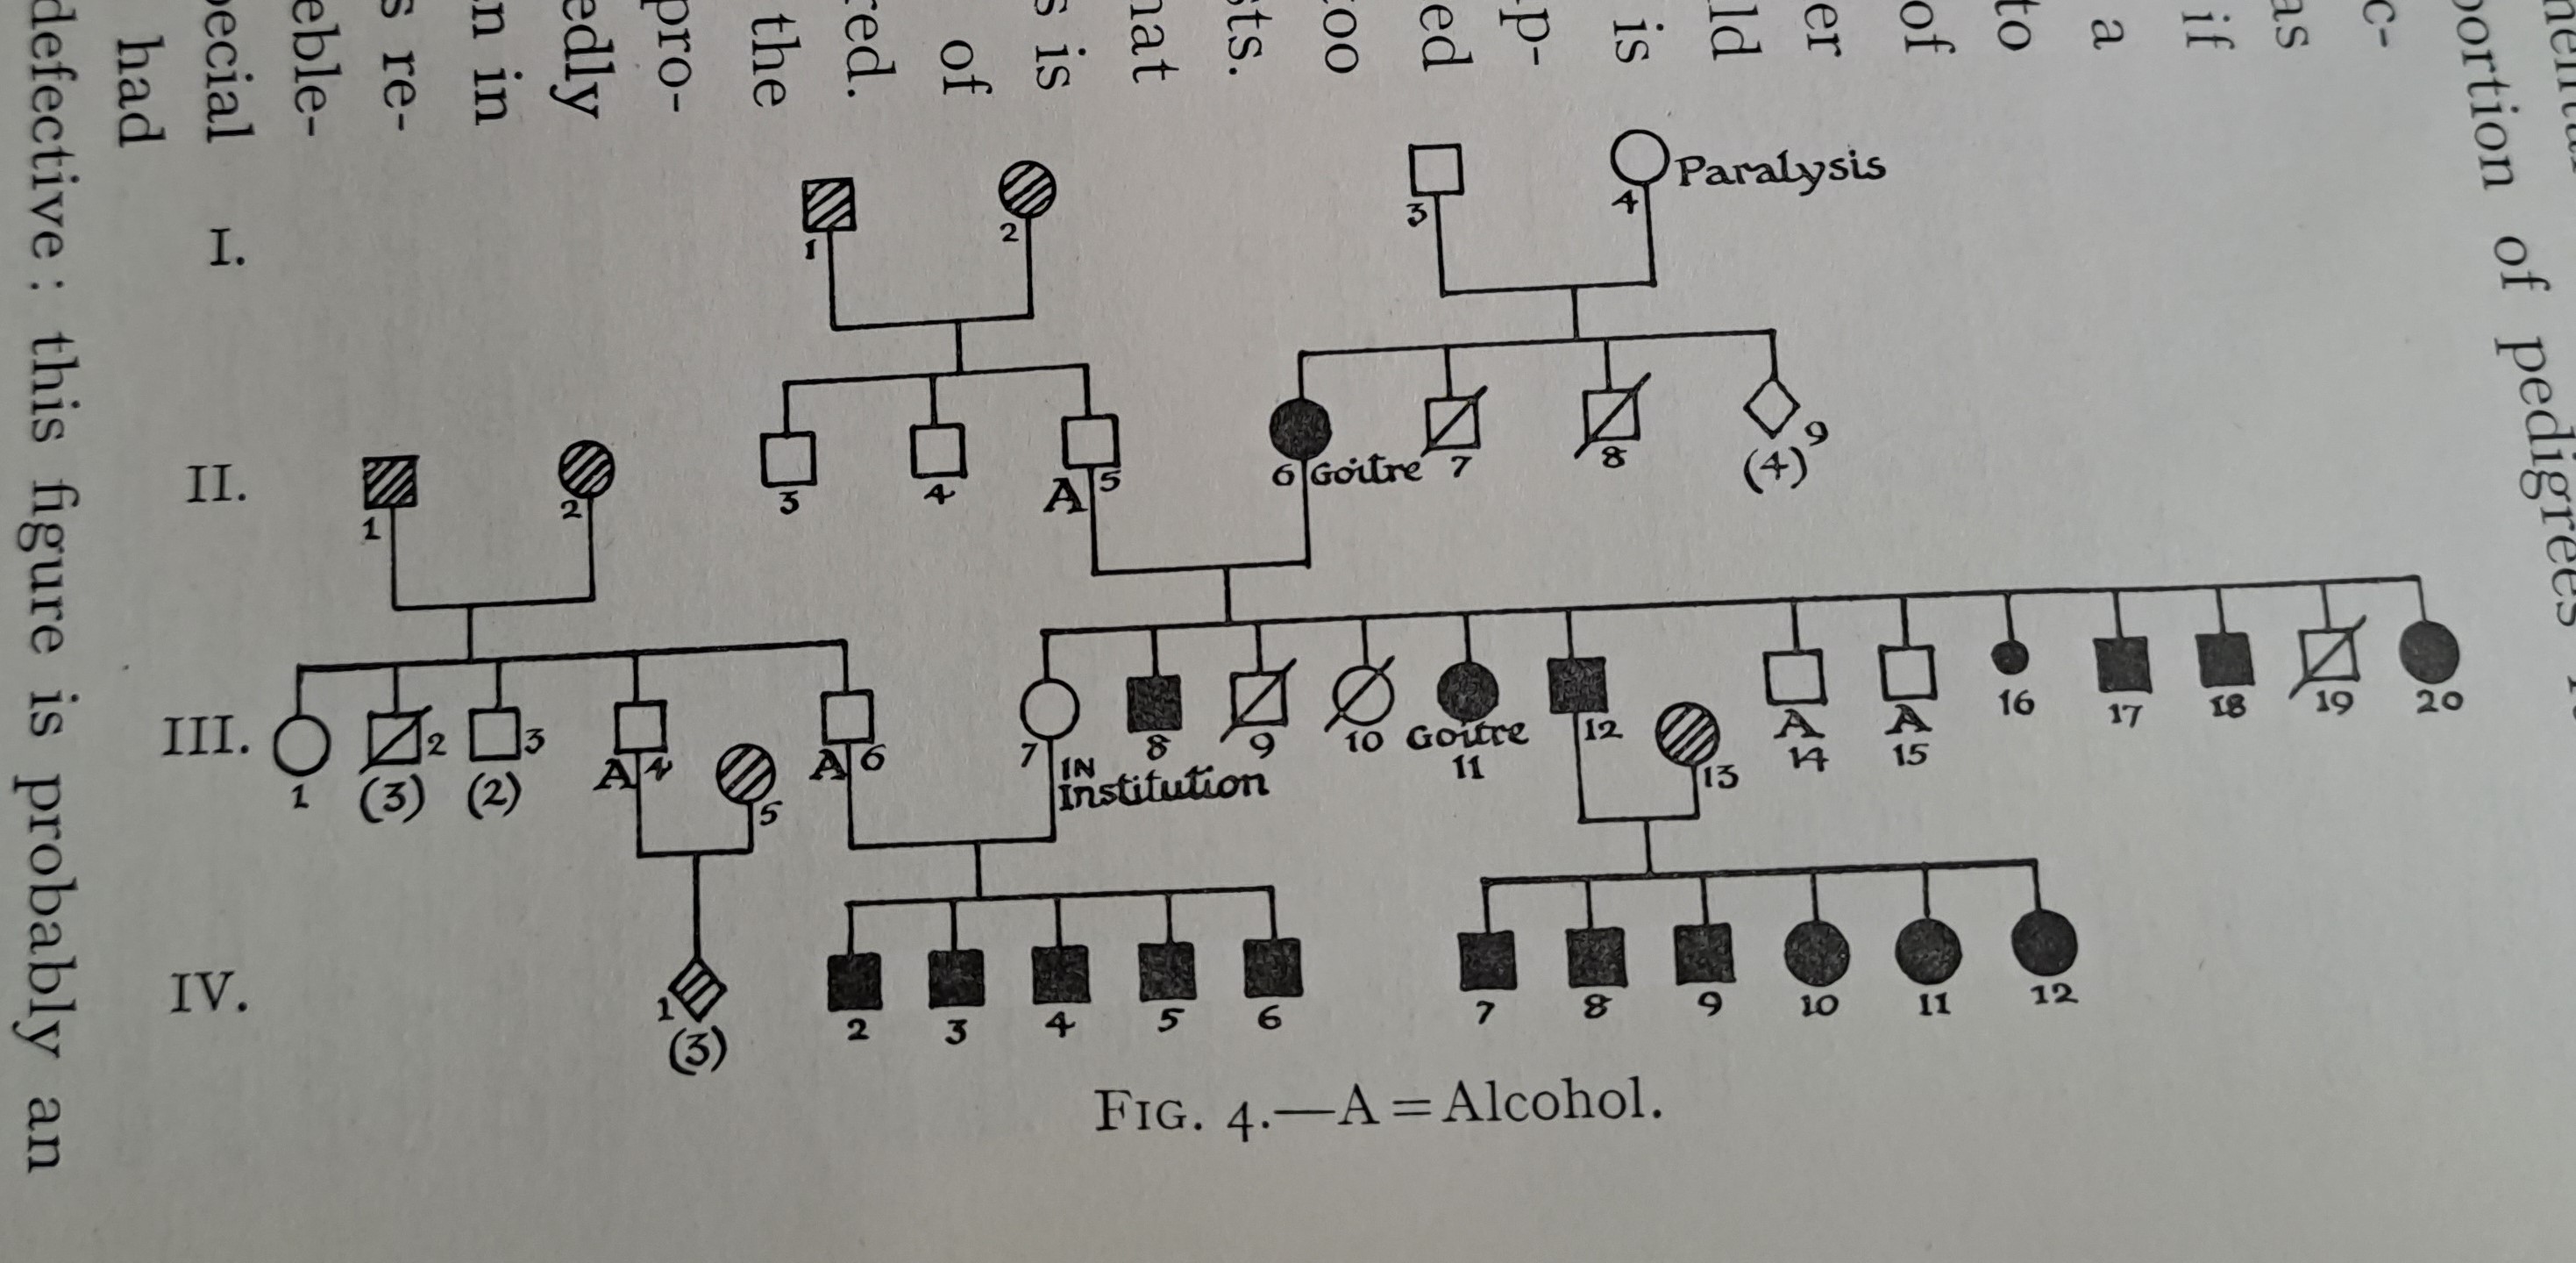 Family tree tracking alcoholism